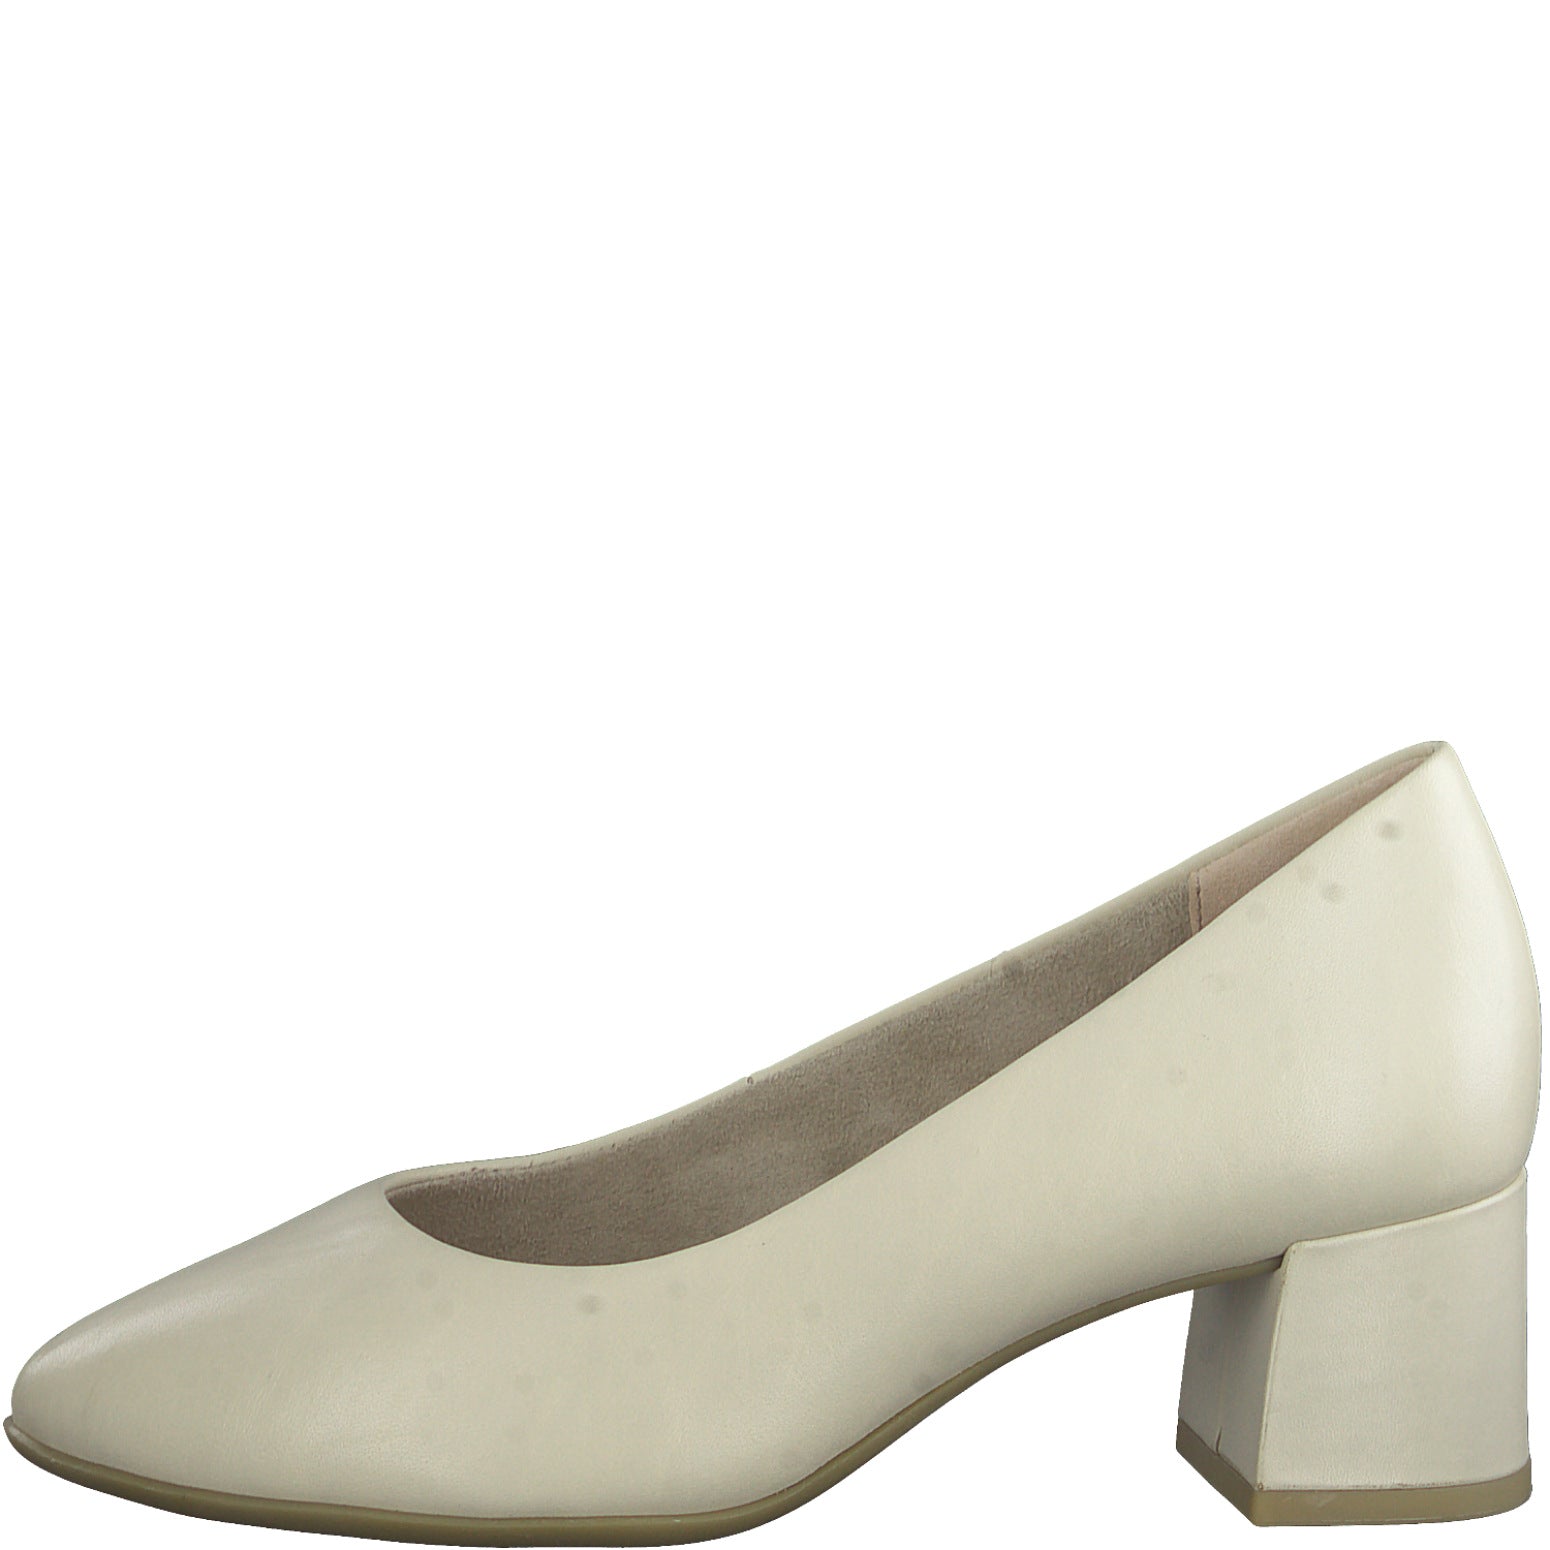 Tamaris 008-52300-20-411 - Grande et jolie - chaussures grandes tailles femme